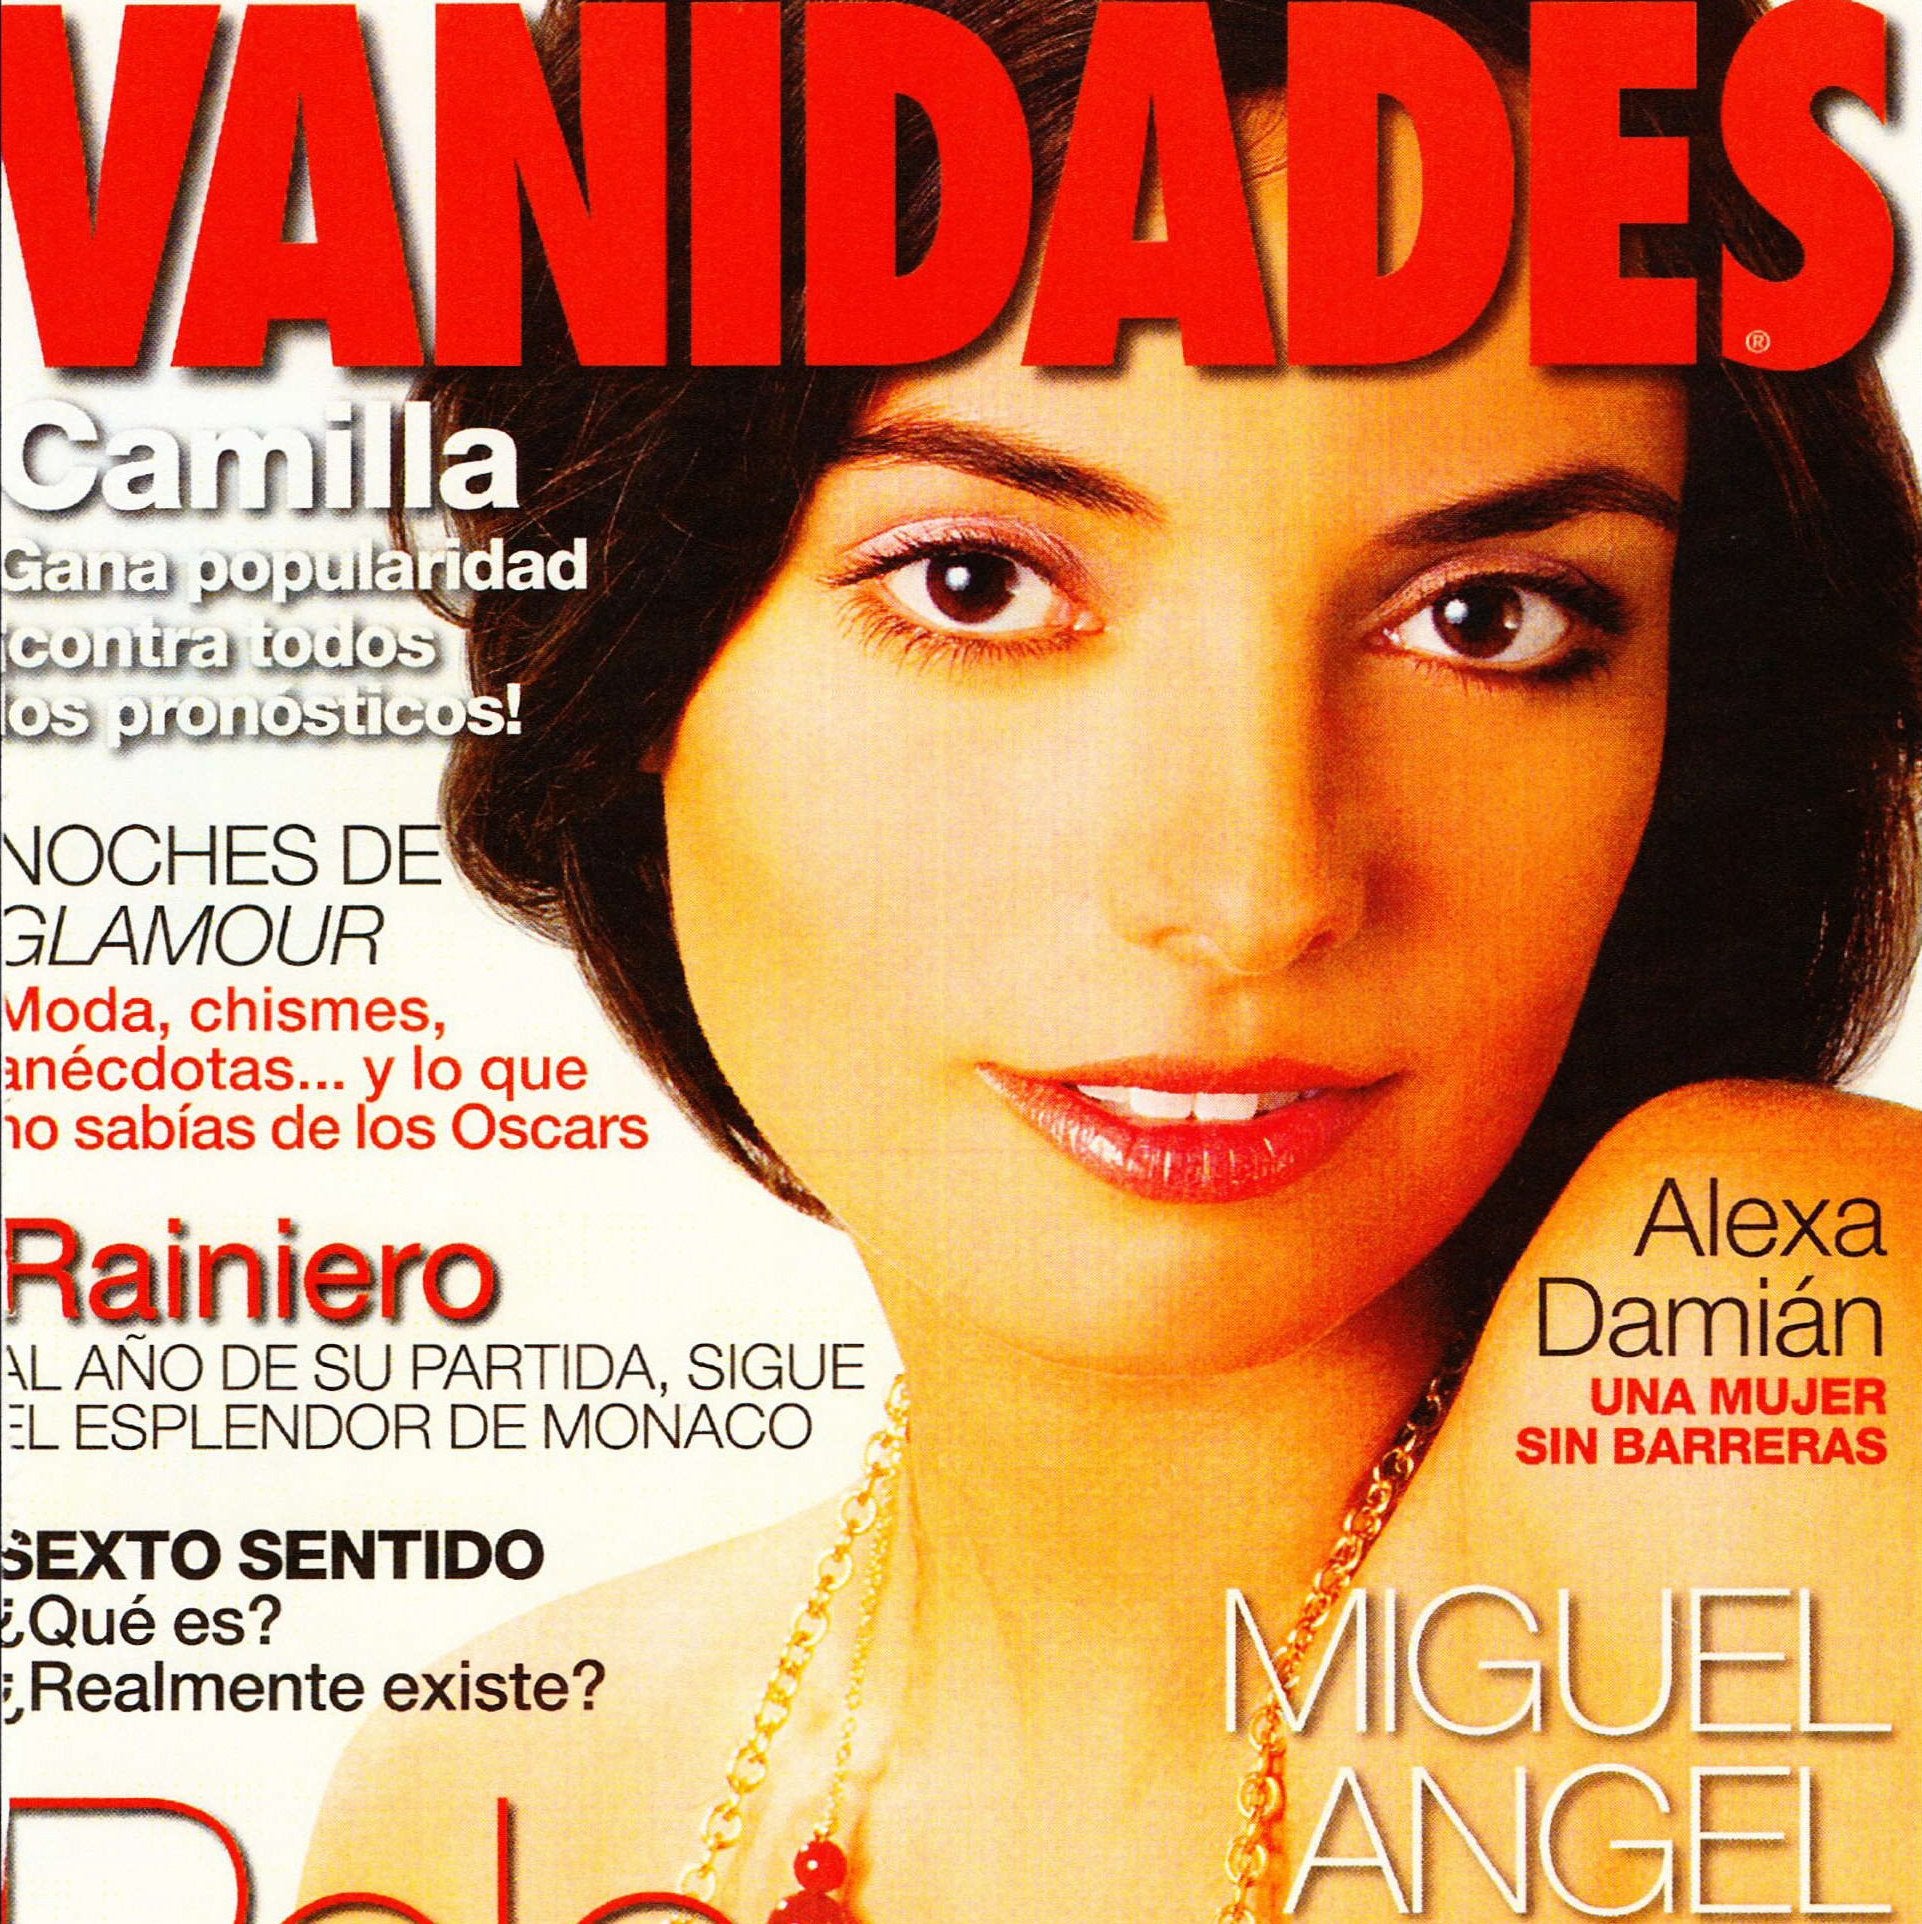 Vanidades August 2006 Magazine - Erika Peña